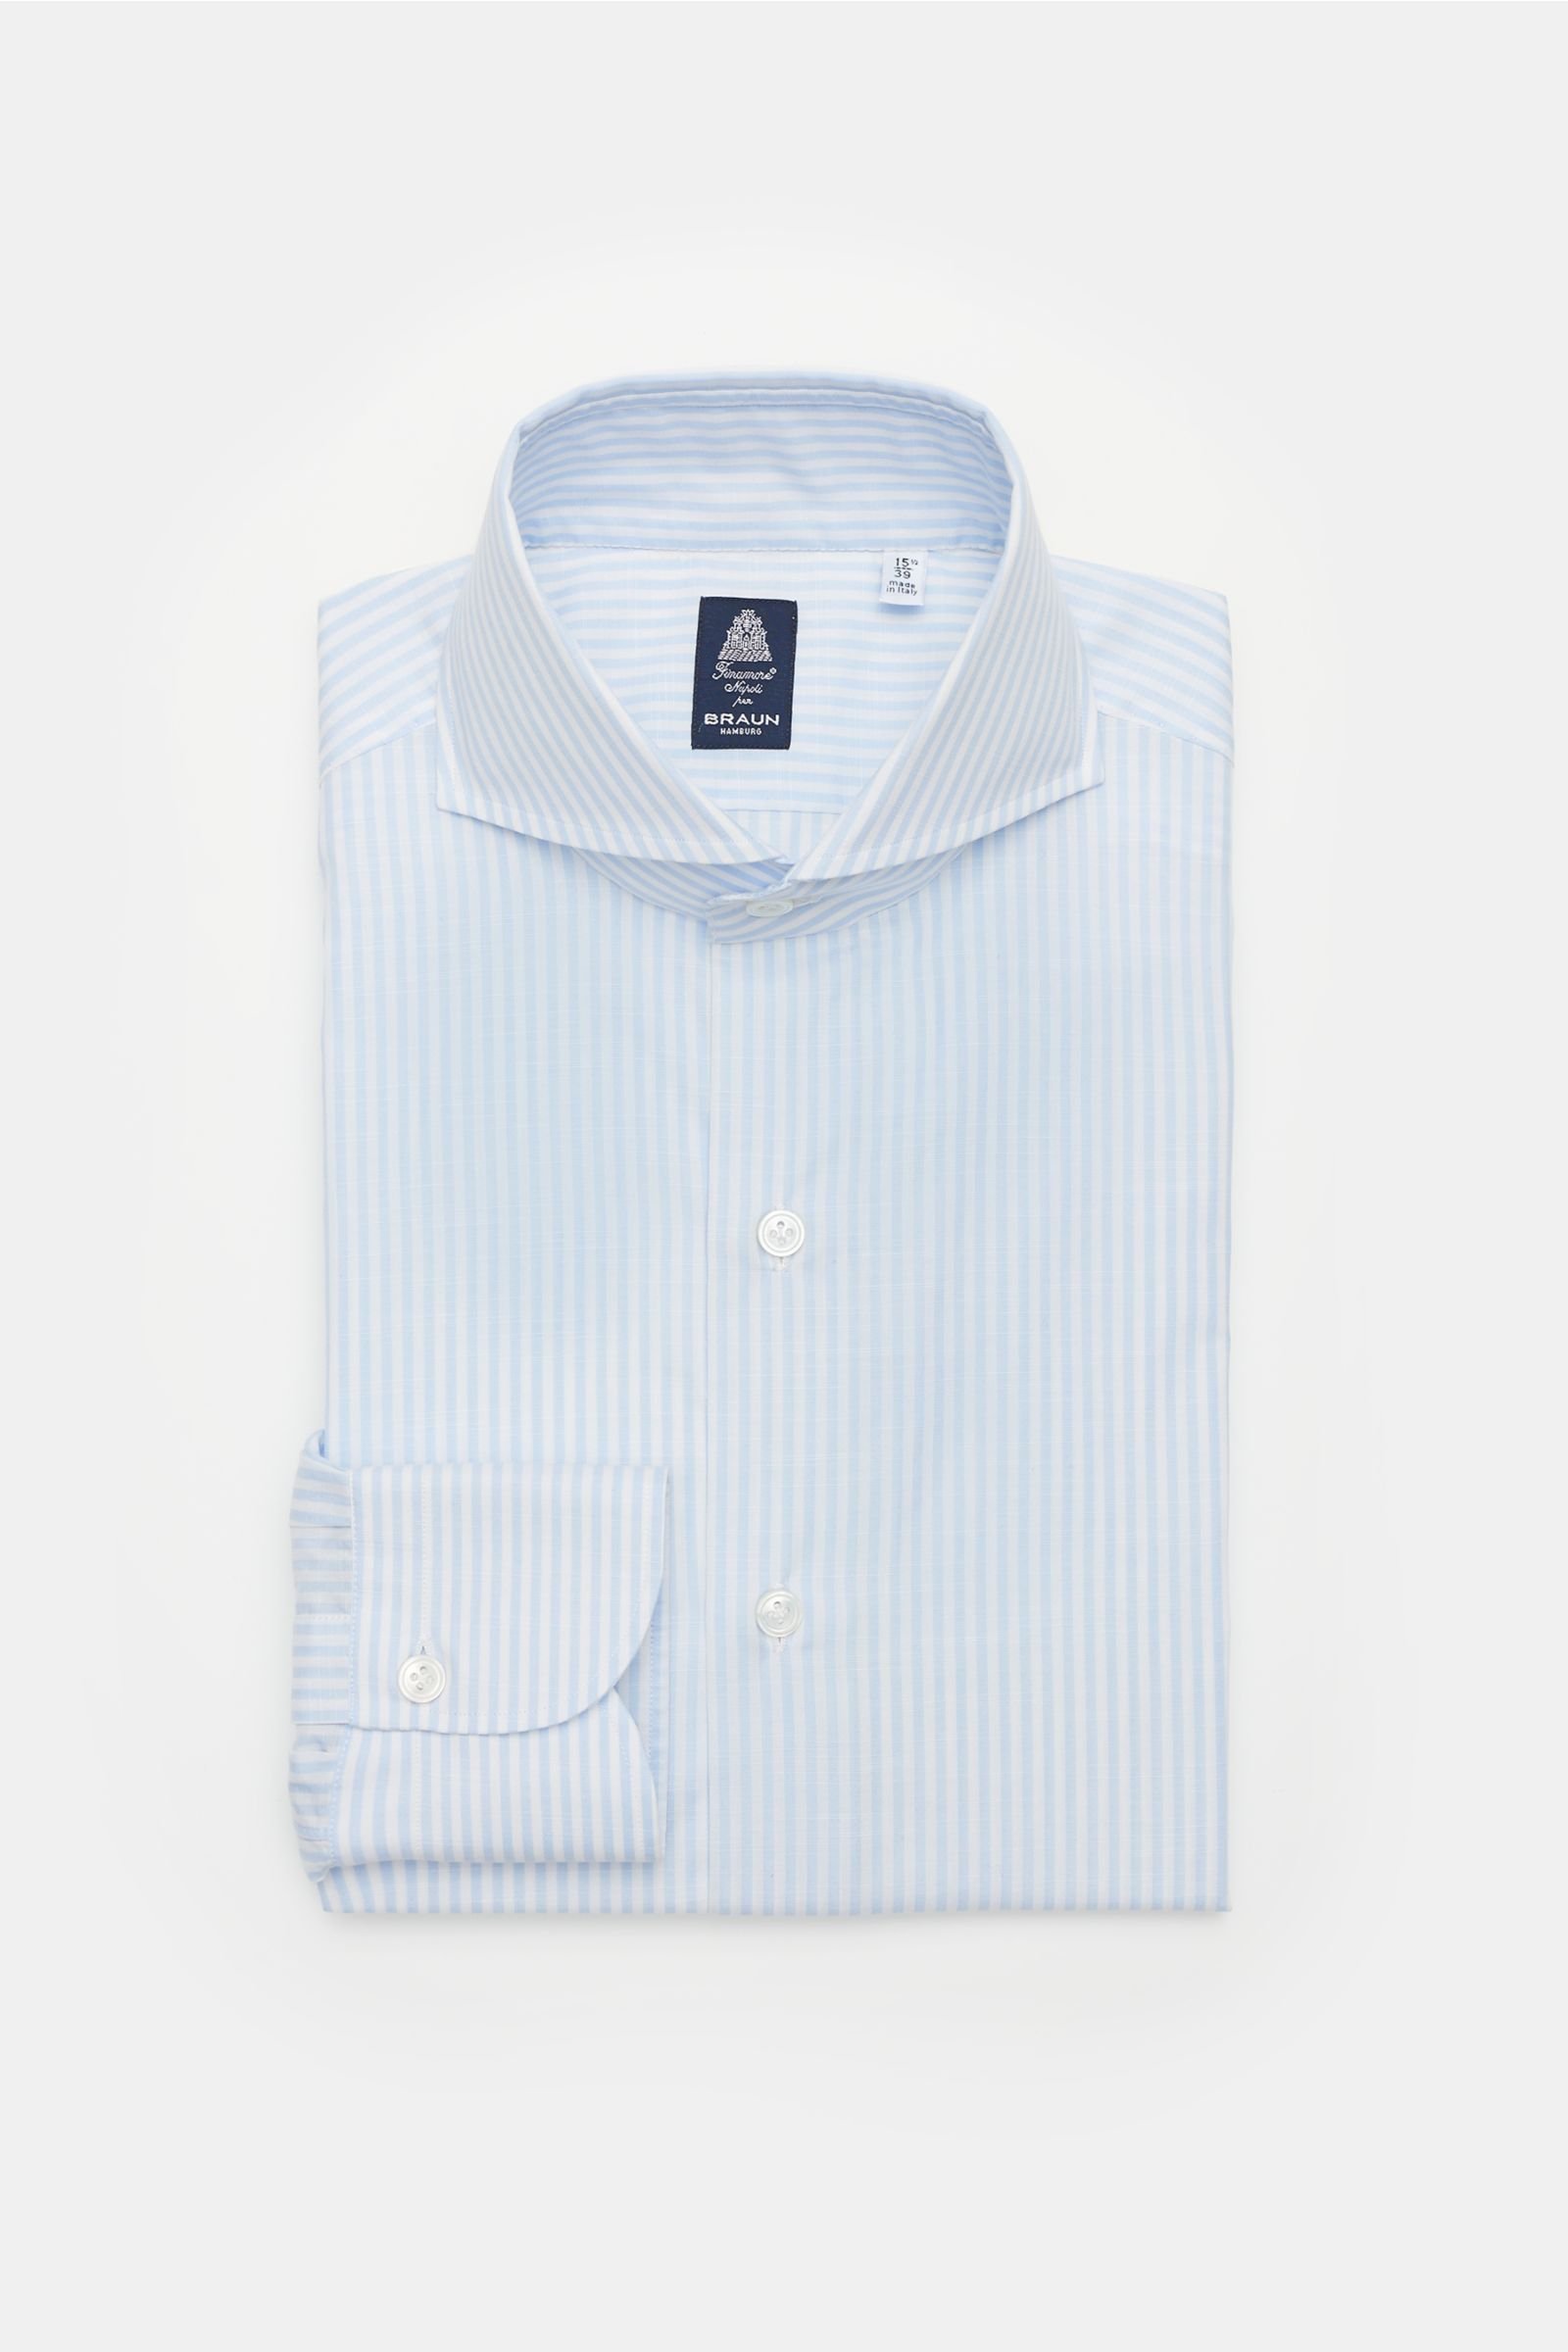 Business shirt 'Sergio Napoli' shark collar pastel blue/white striped